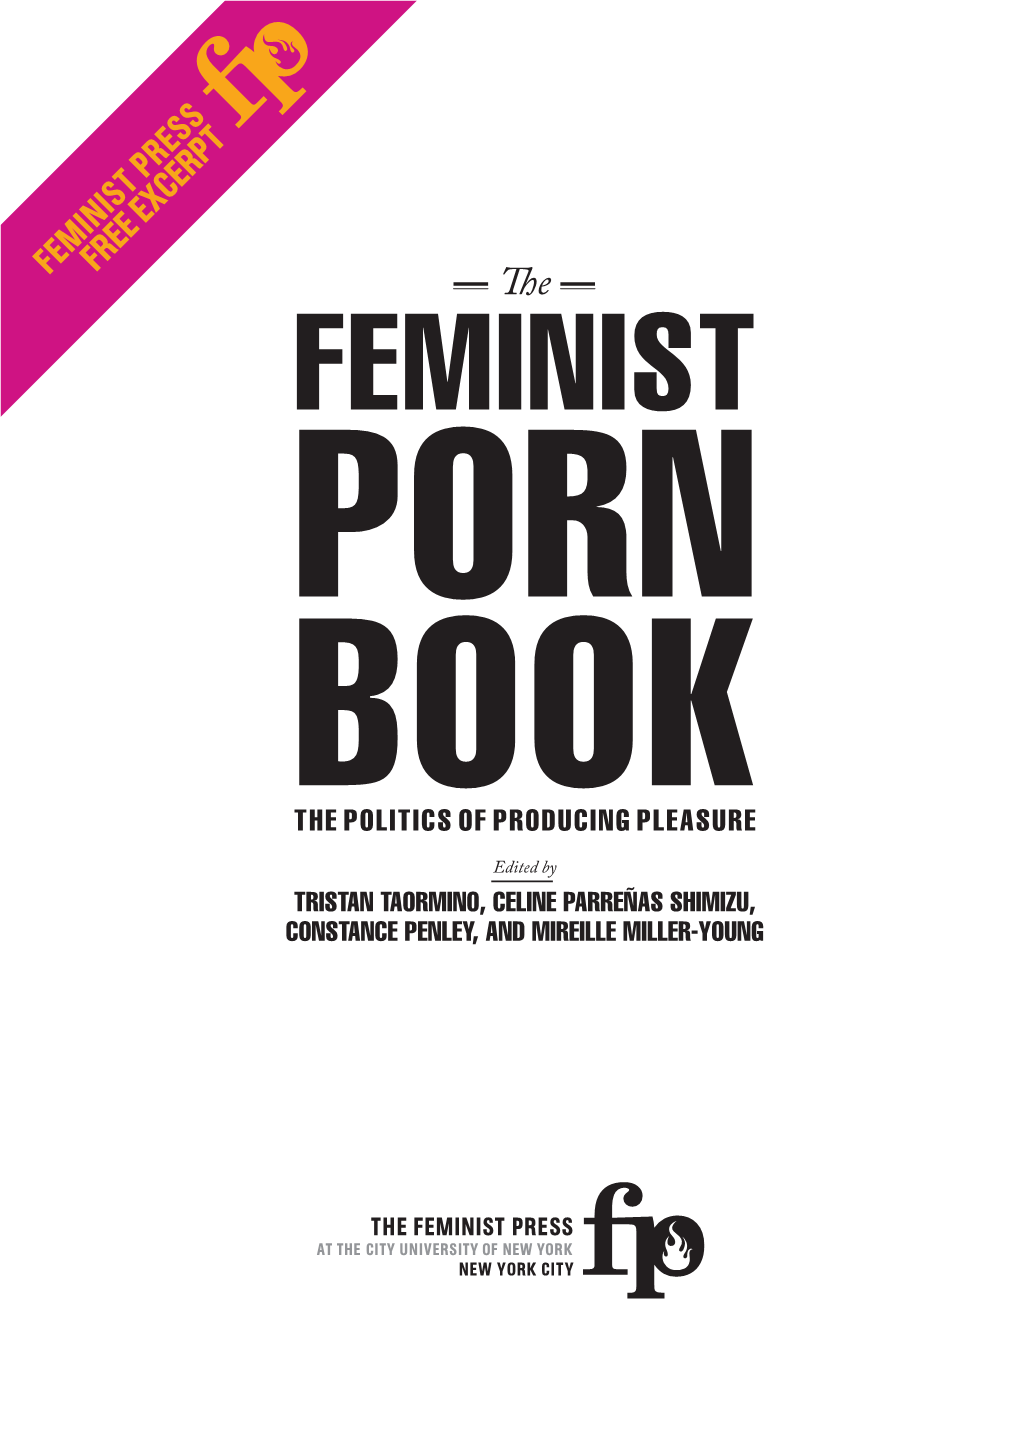 To Feminist Porn Book- the Politics of Producing Pleasure